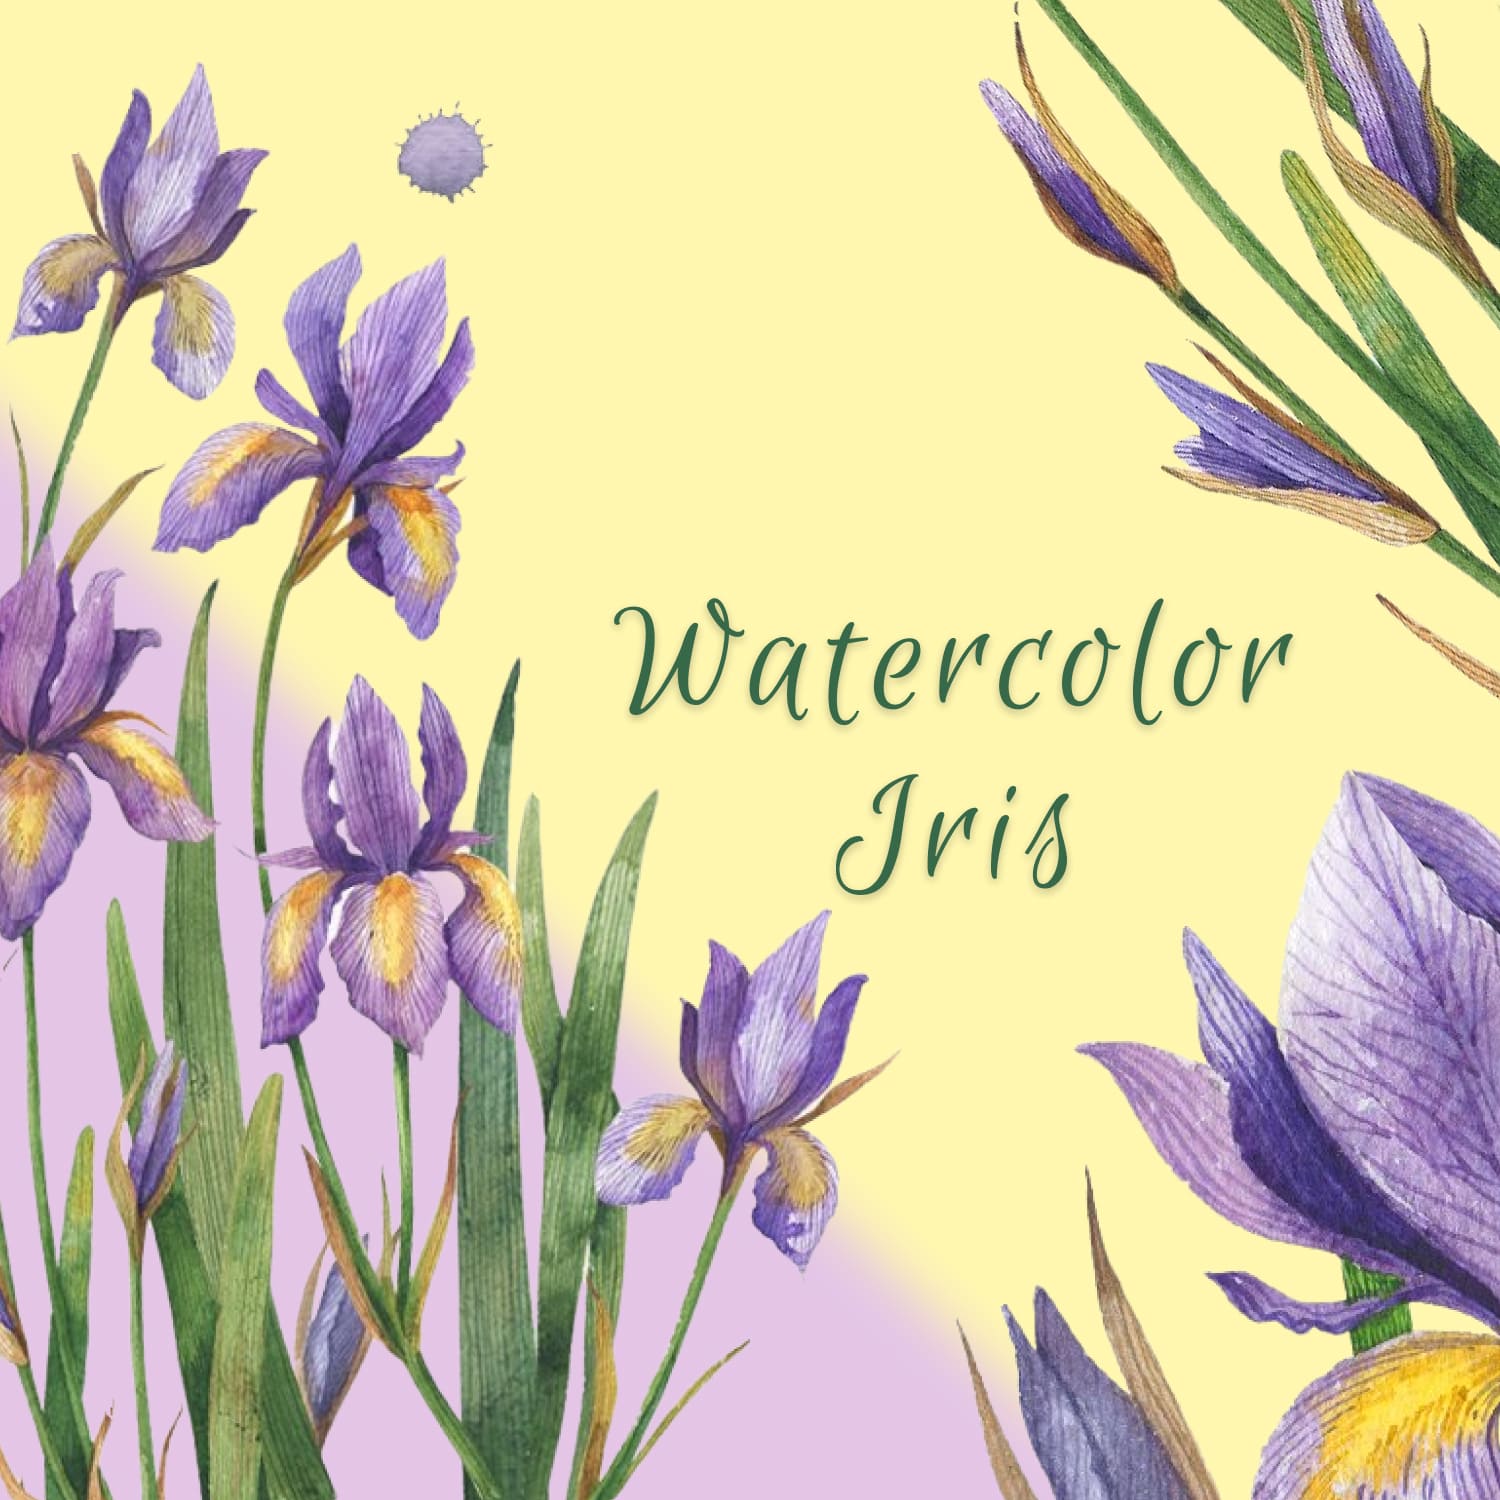 Watercolor Iris Set of Flowers cover image.